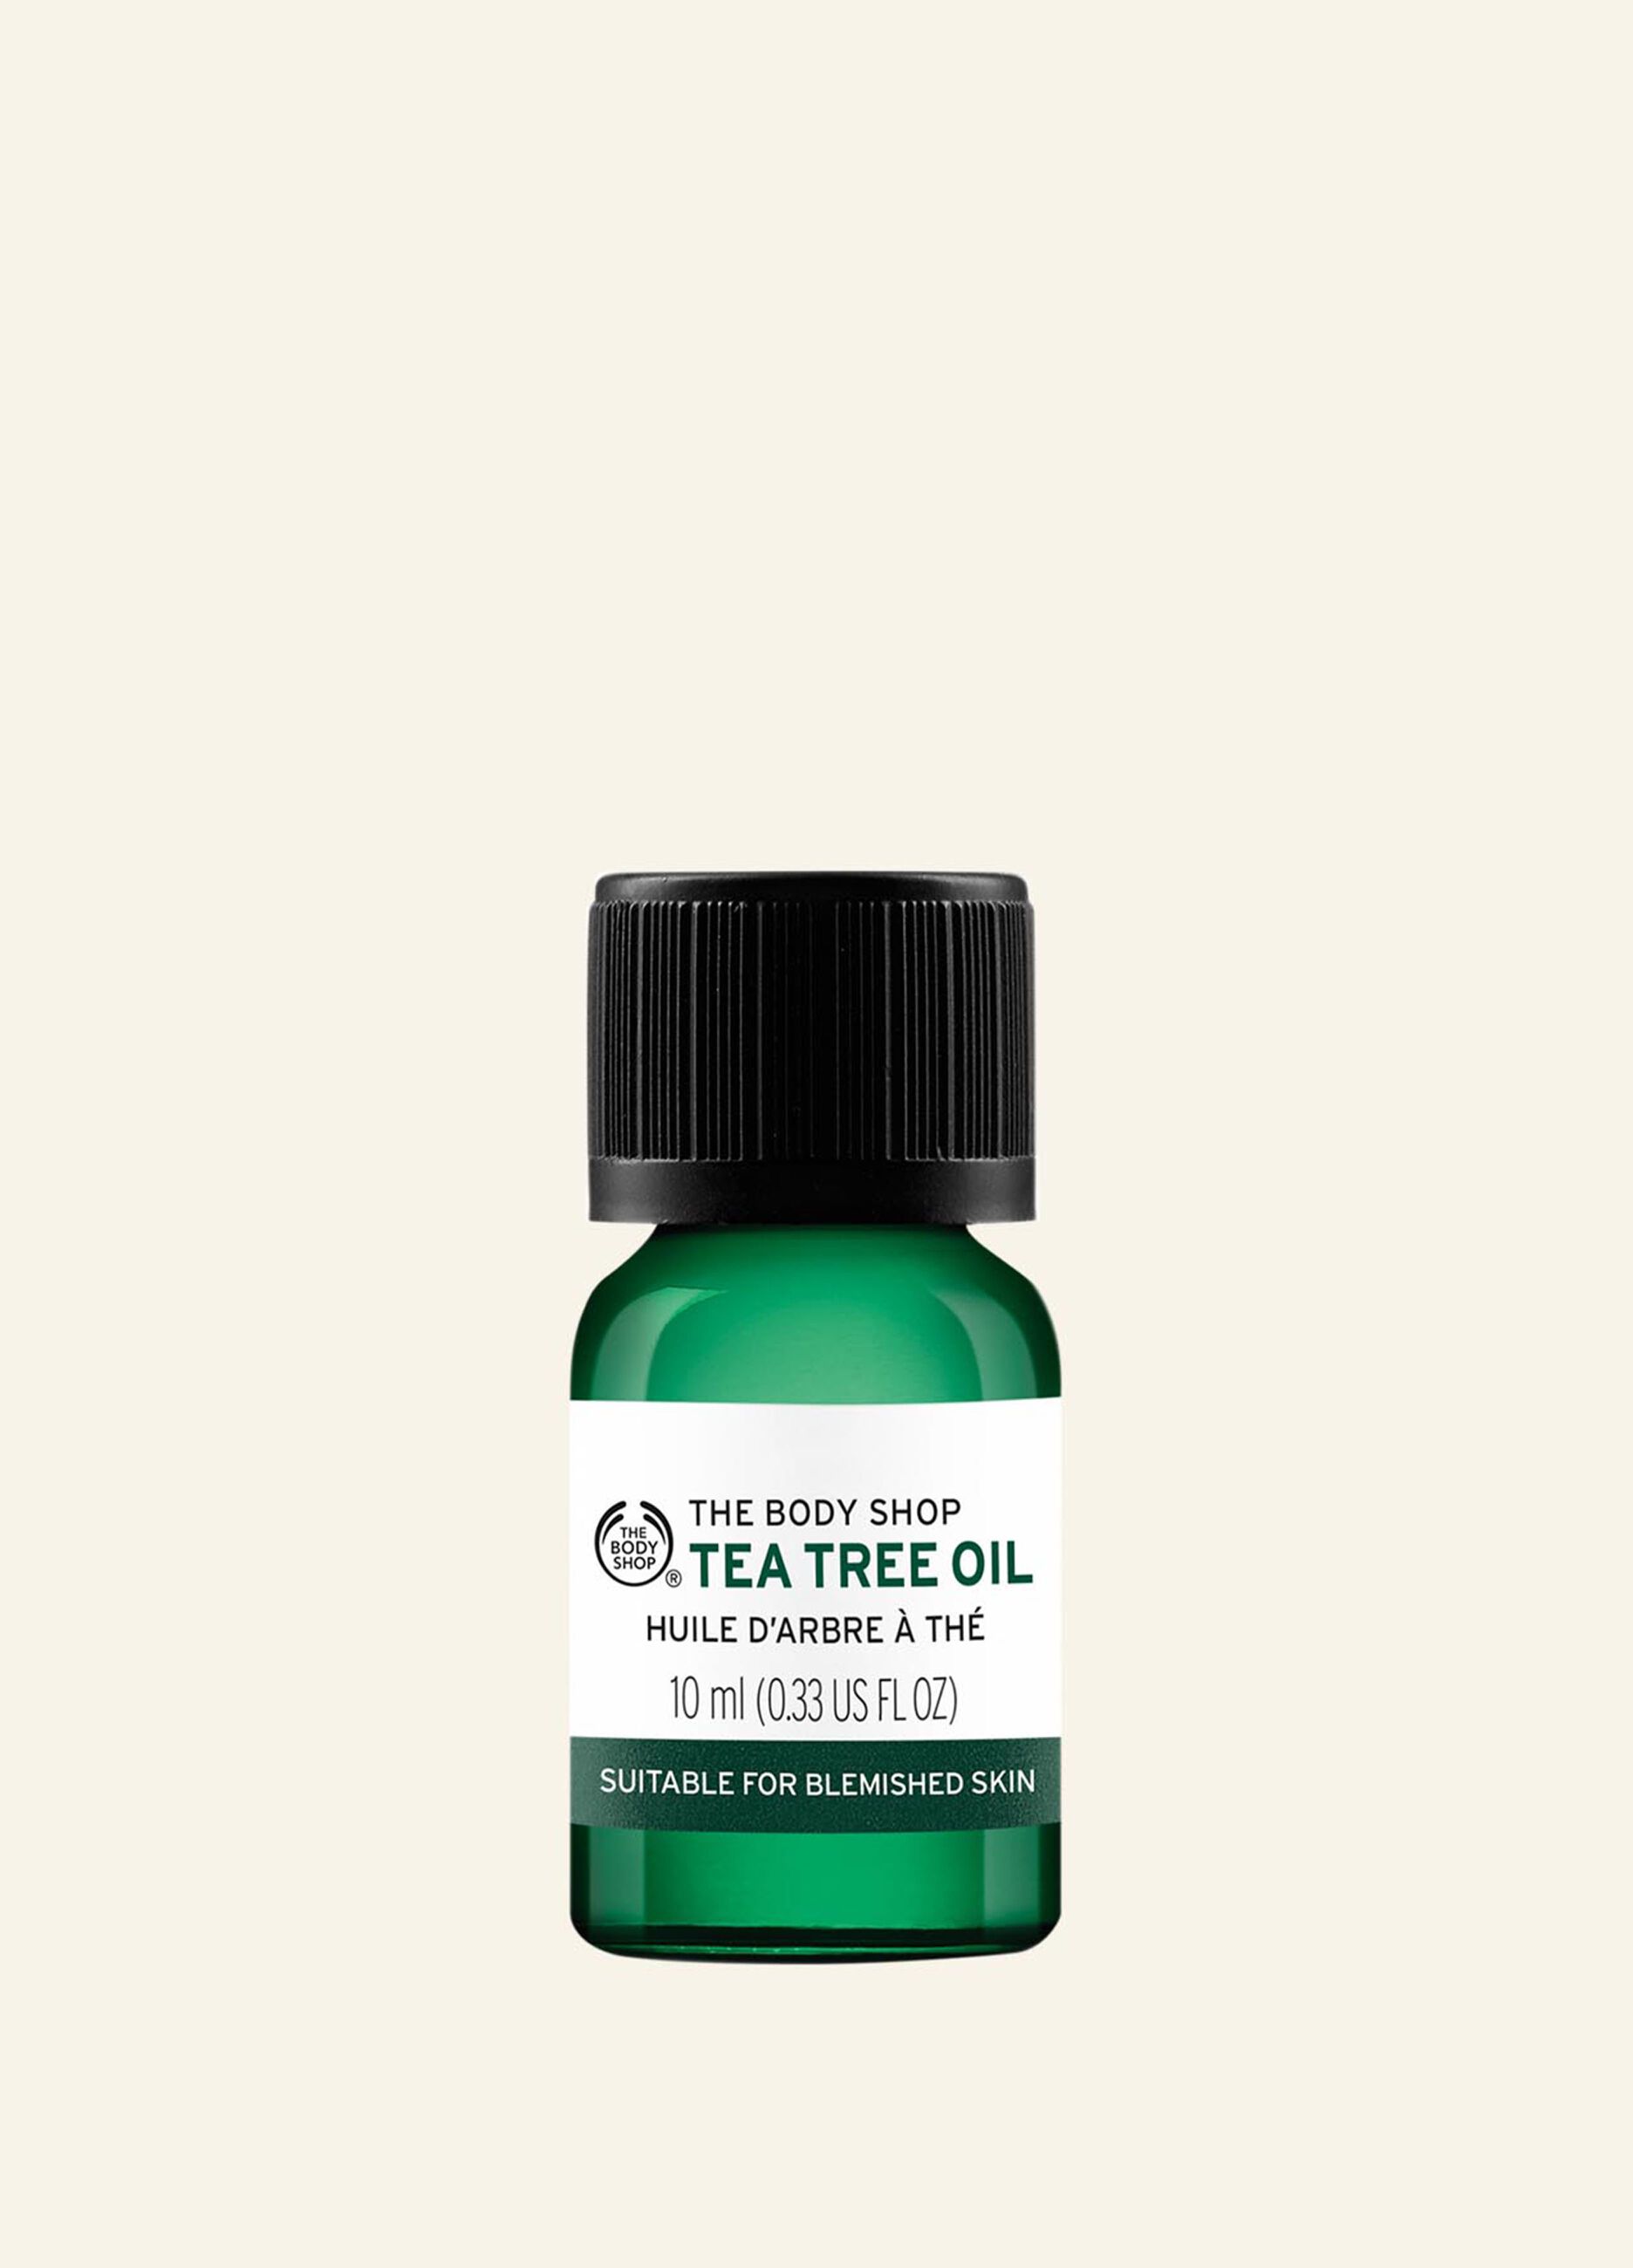 The Body Shop Tea Tree oil 10ml